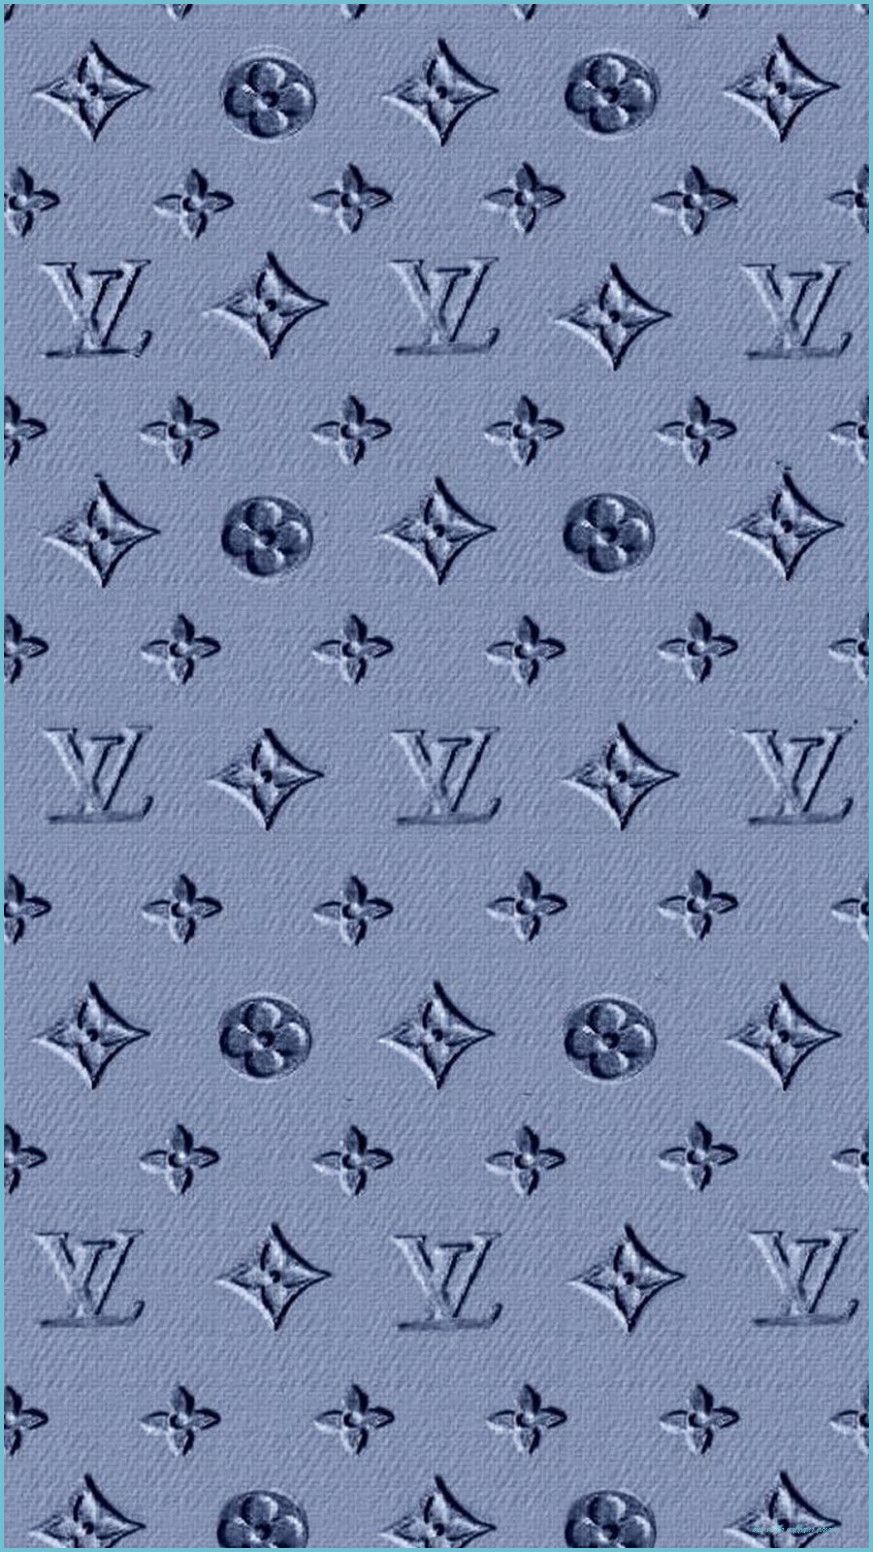 Louis Vuitton Logo Wallpaper  Louis vuitton iphone wallpaper